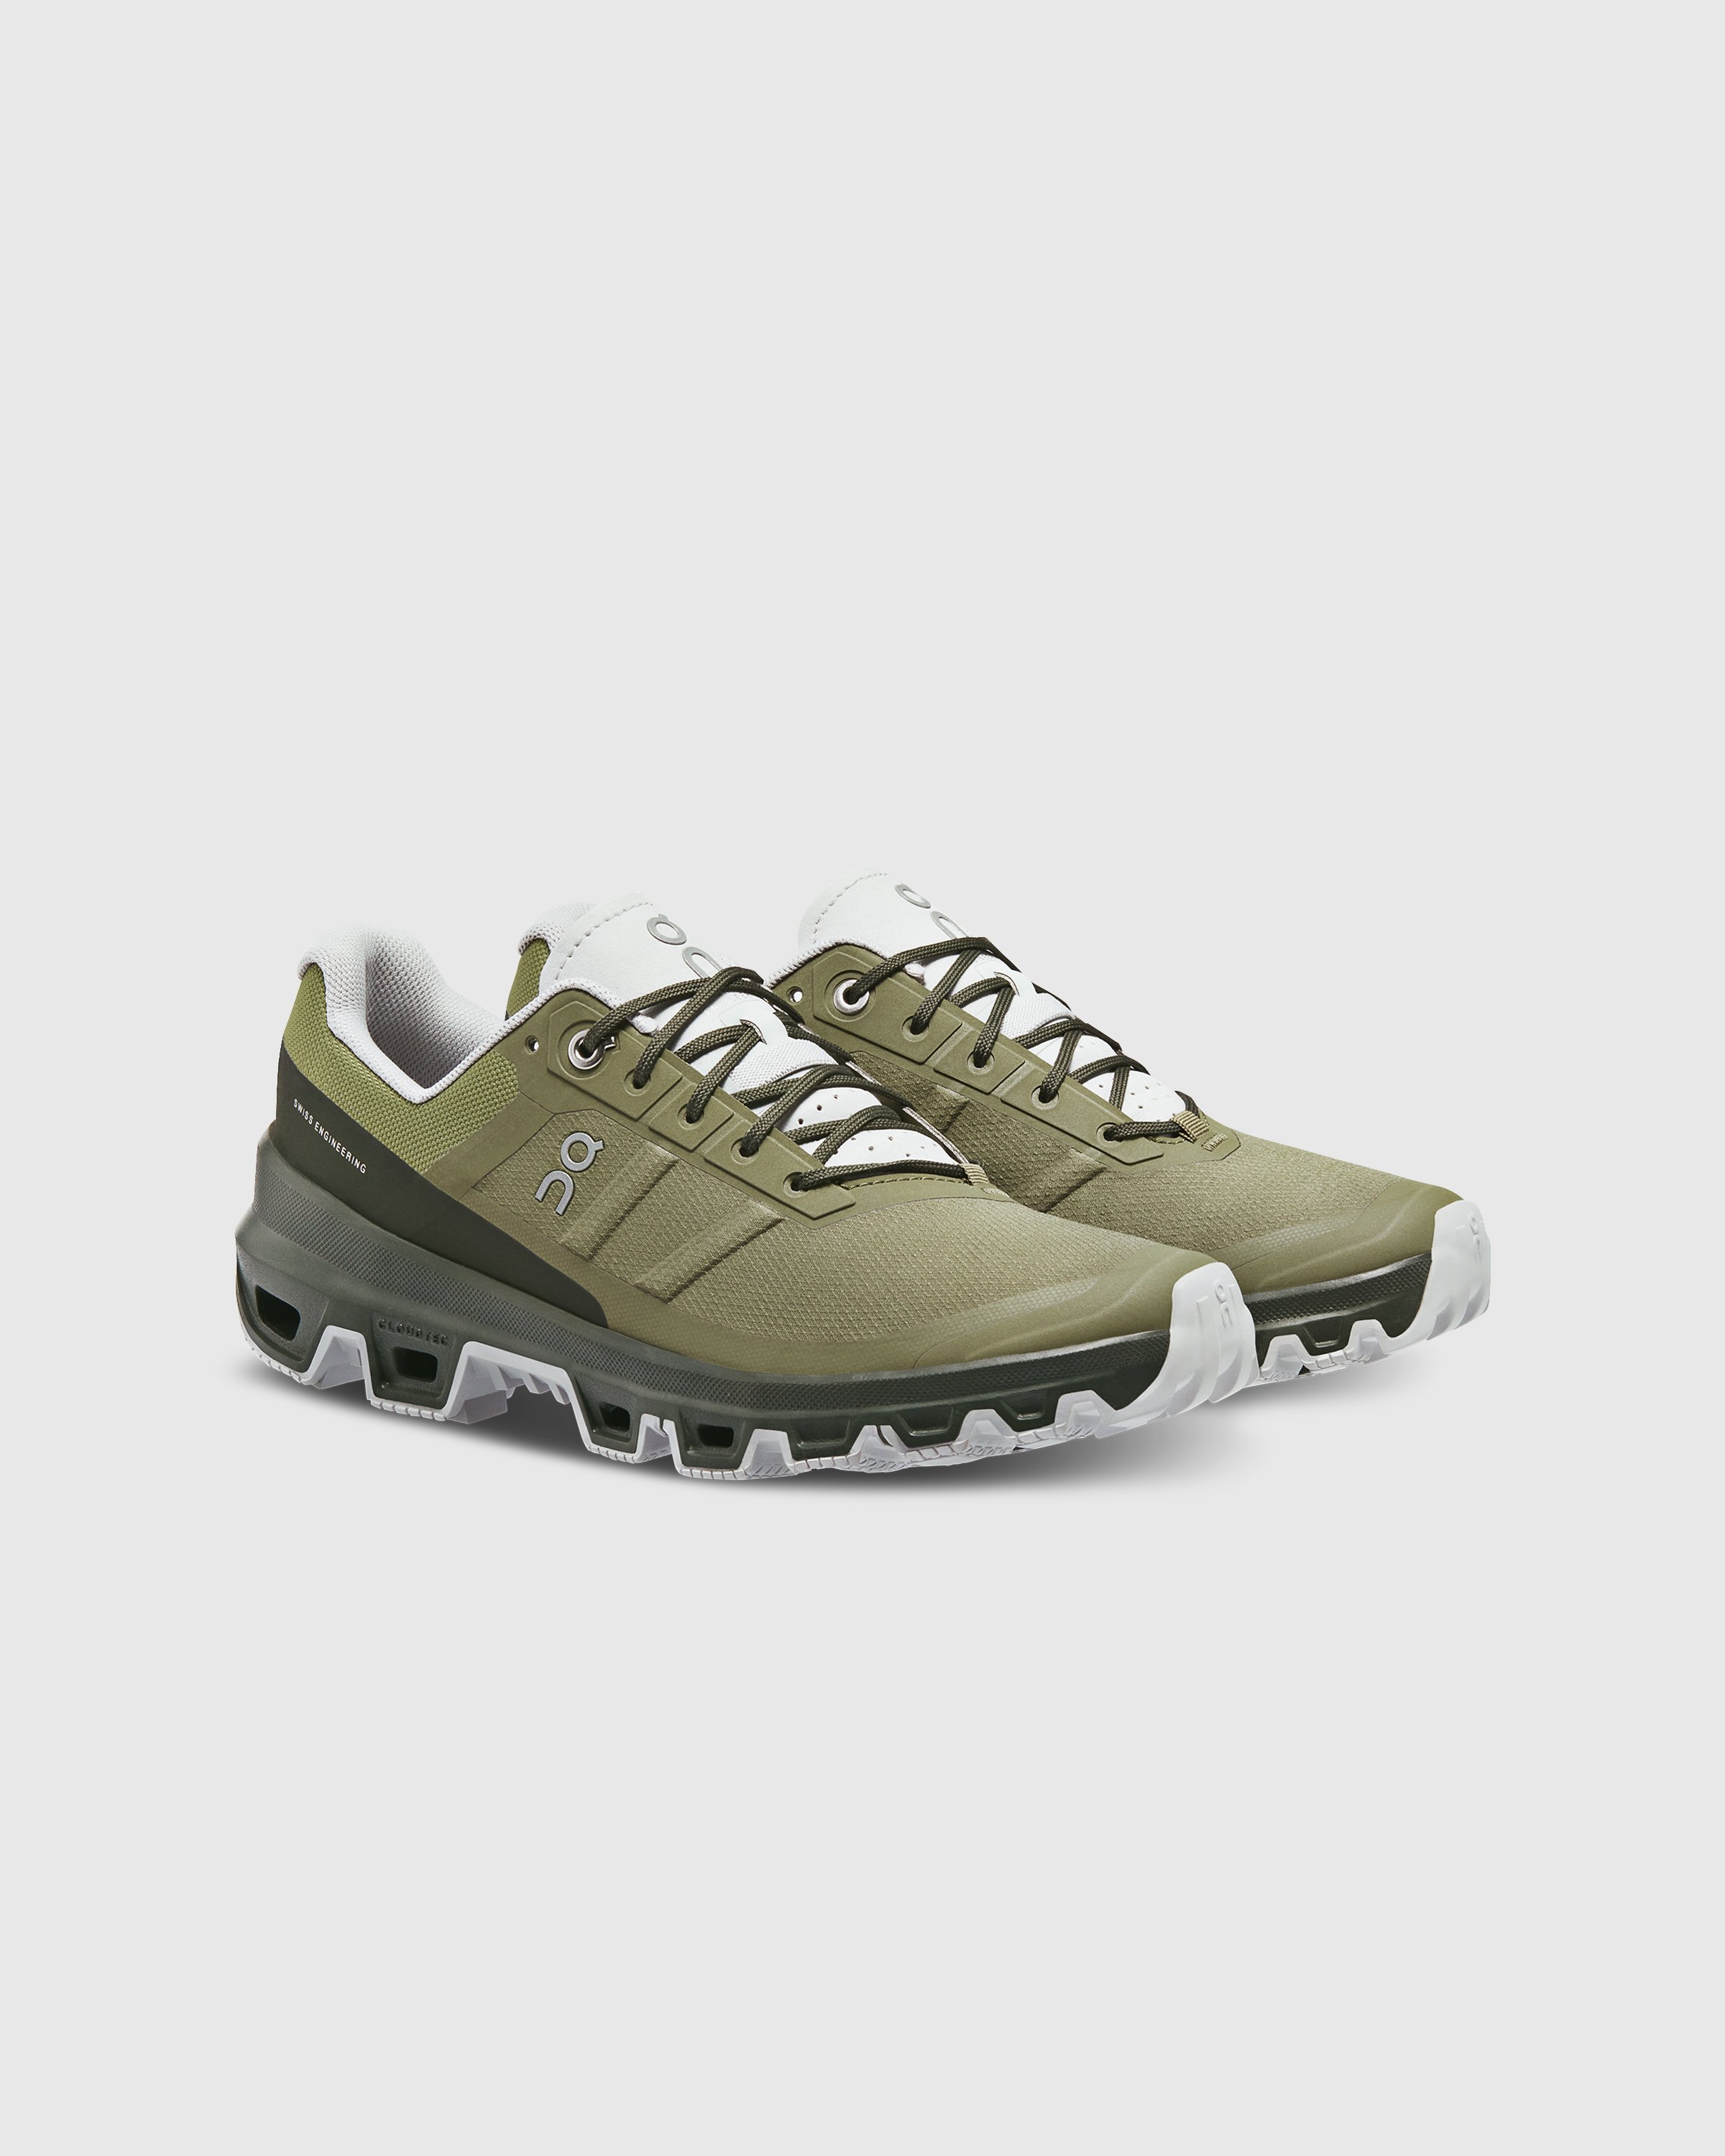 On - Cloudventure Olive/Fir - Footwear - Green - Image 3